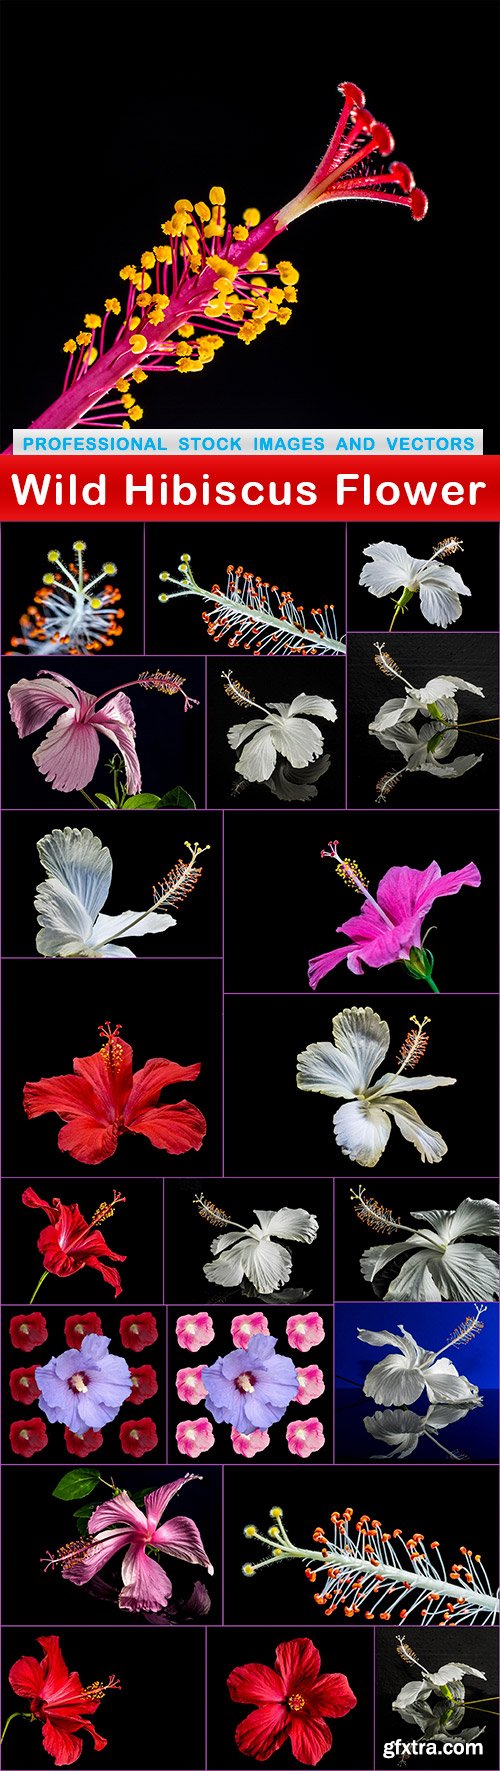 Wild Hibiscus Flower - 22 UHQ JPEG